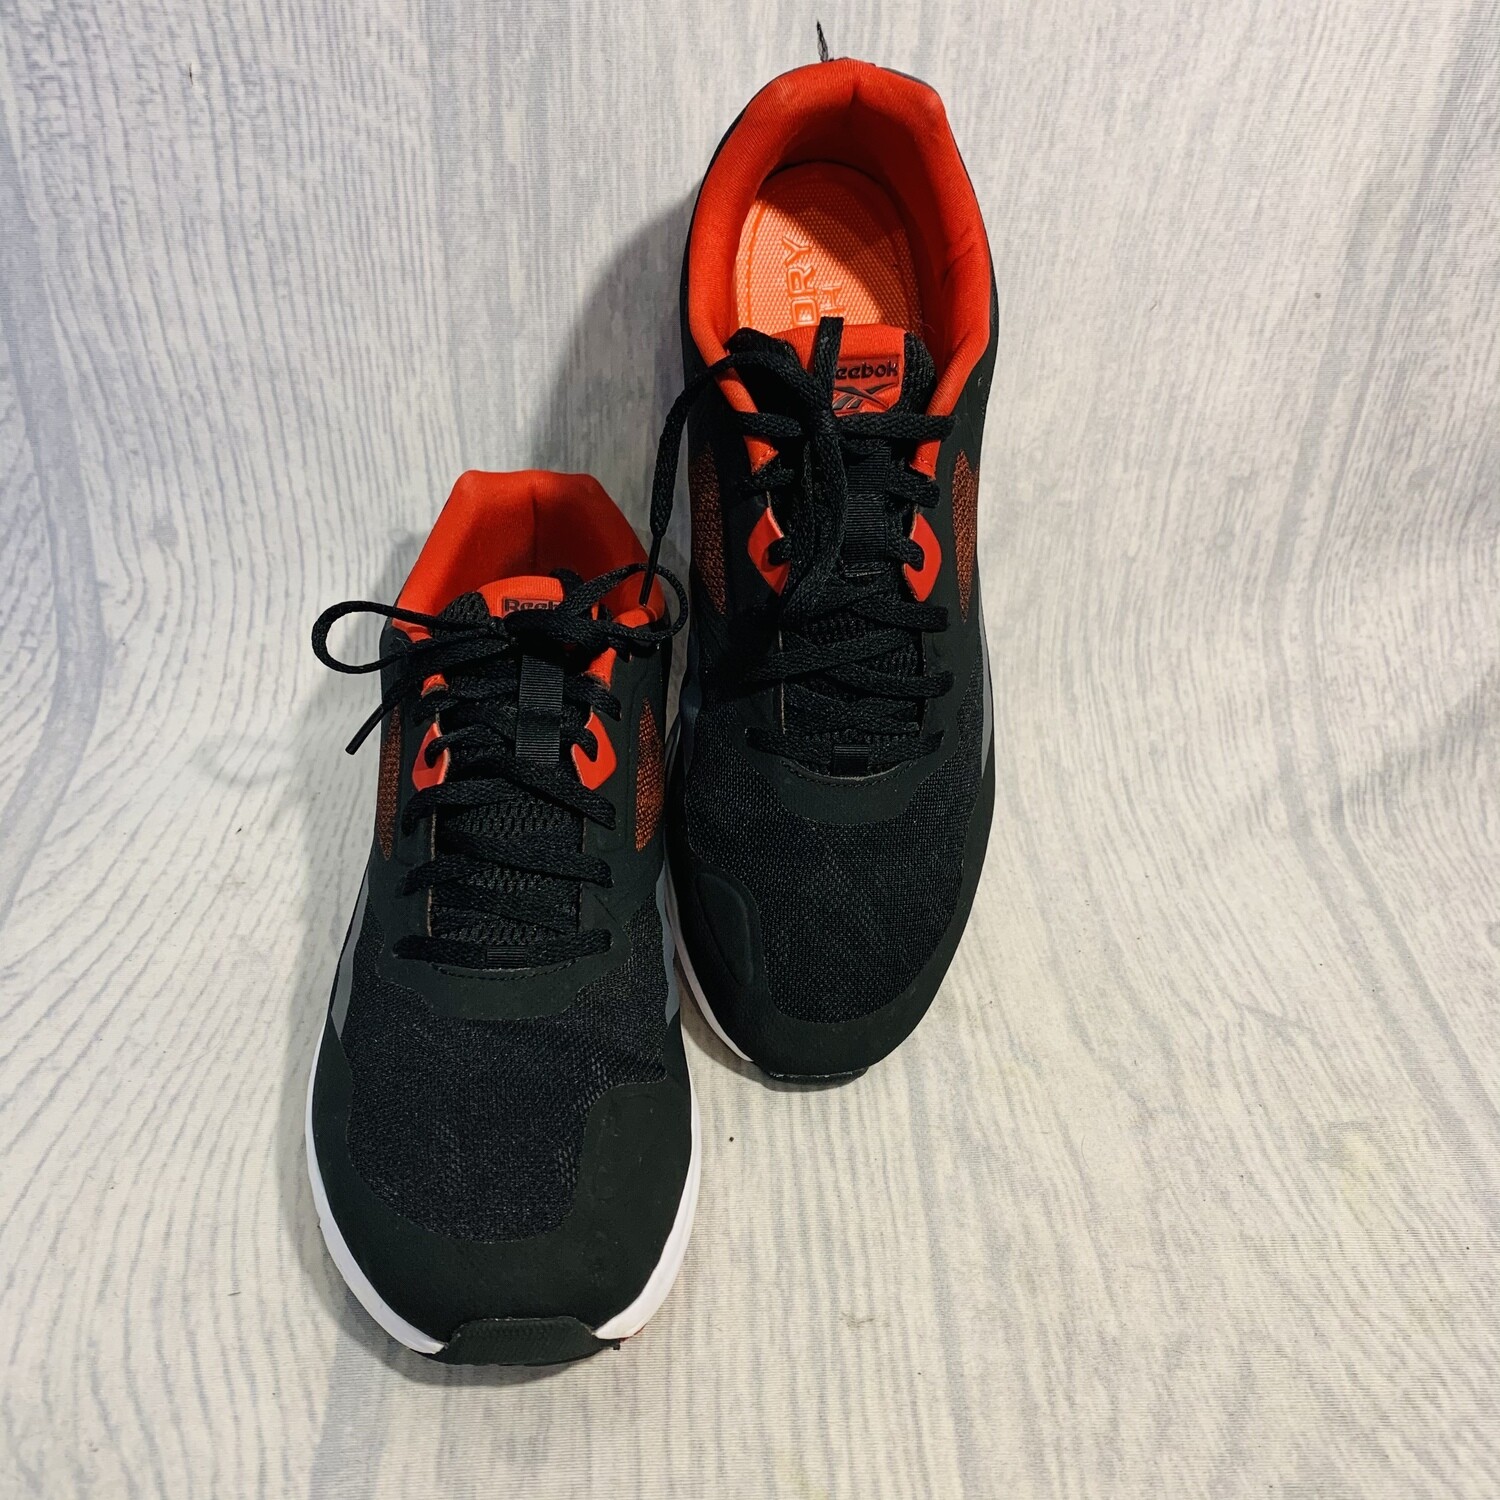 Size 10 Reebok Runner 4 Running Shoe Black/Red